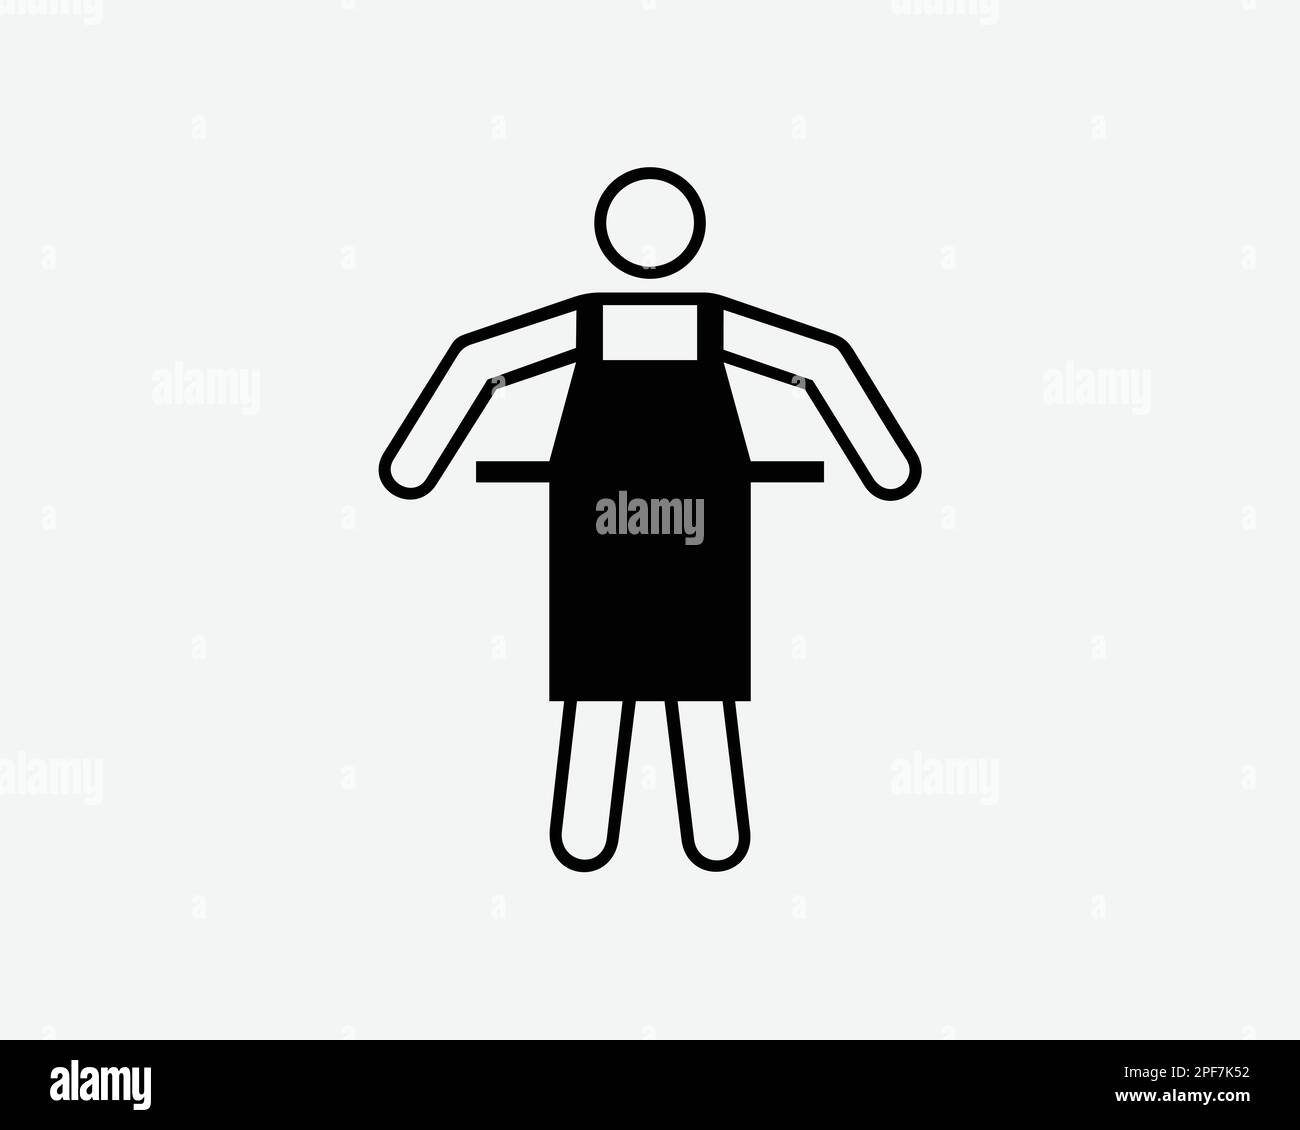 Wearing Apron Icon Stick Figure Man Kitchen Chef Cook Garment Black White Silhouette Symbol Sign Graphic Clipart Artwork Illustration Pictogram Vector Stock Vector